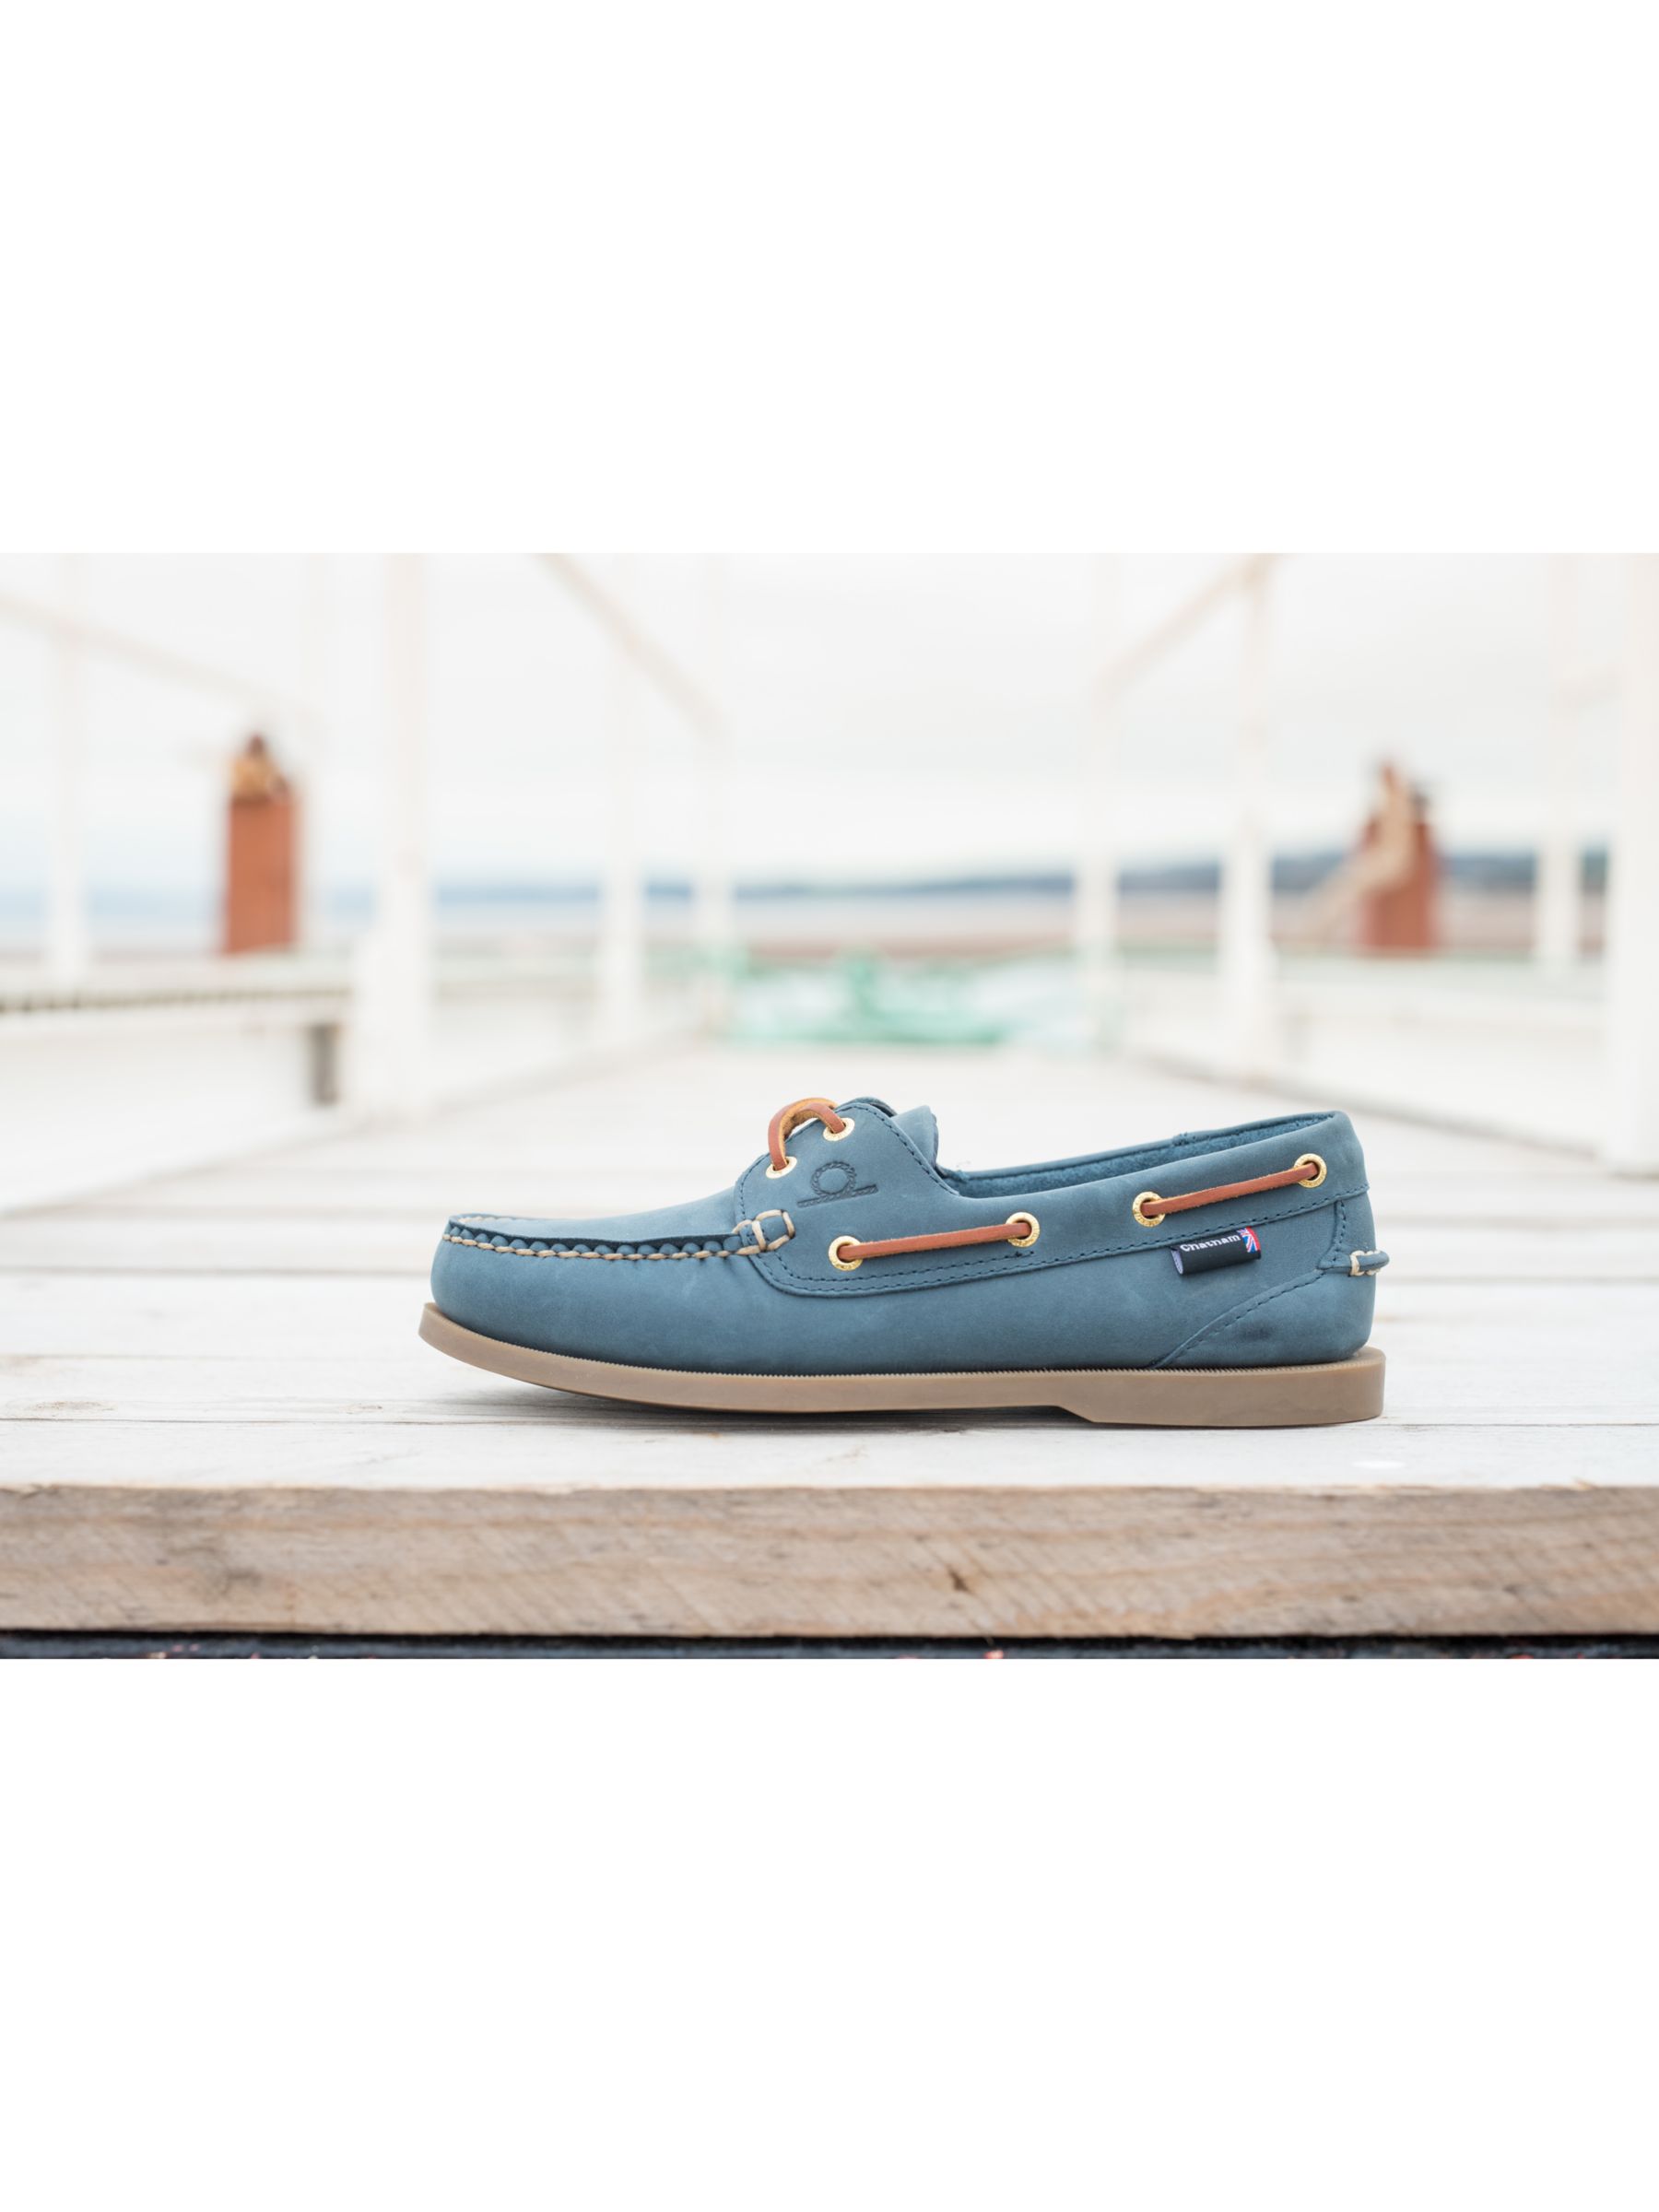 Top-Sider Boat Shoes & Deck Shoes for Men